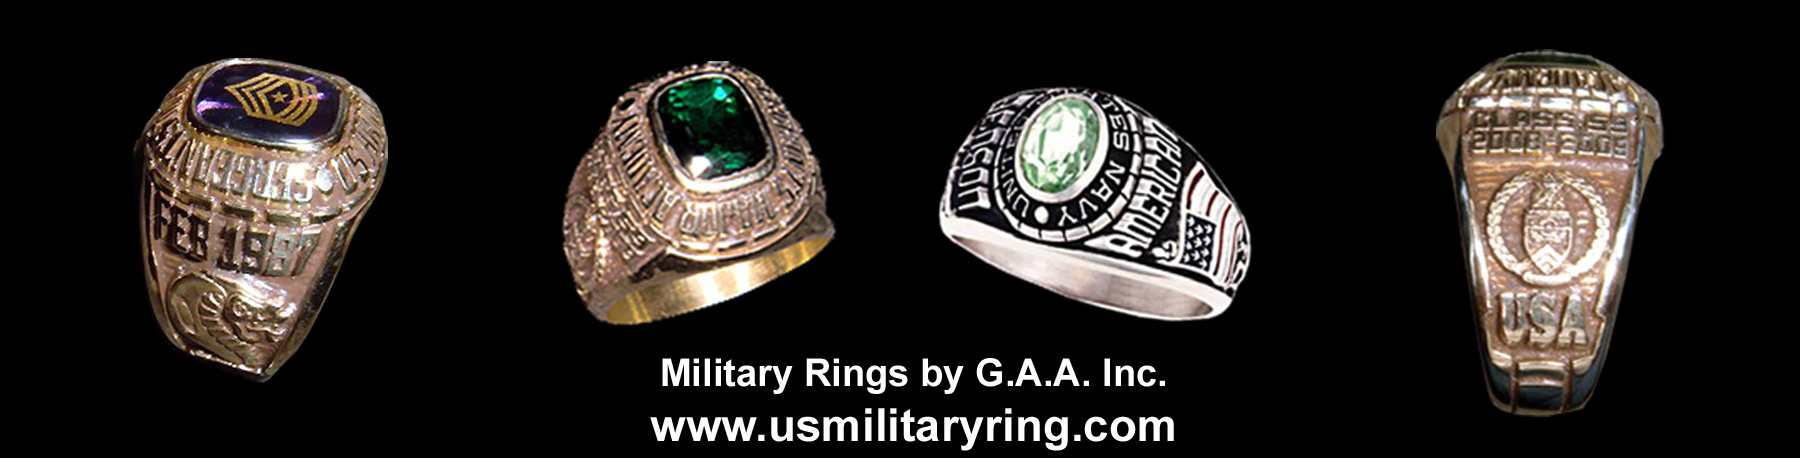 Military Rings - Sergeants Major Class Rings, USASMA, SMA